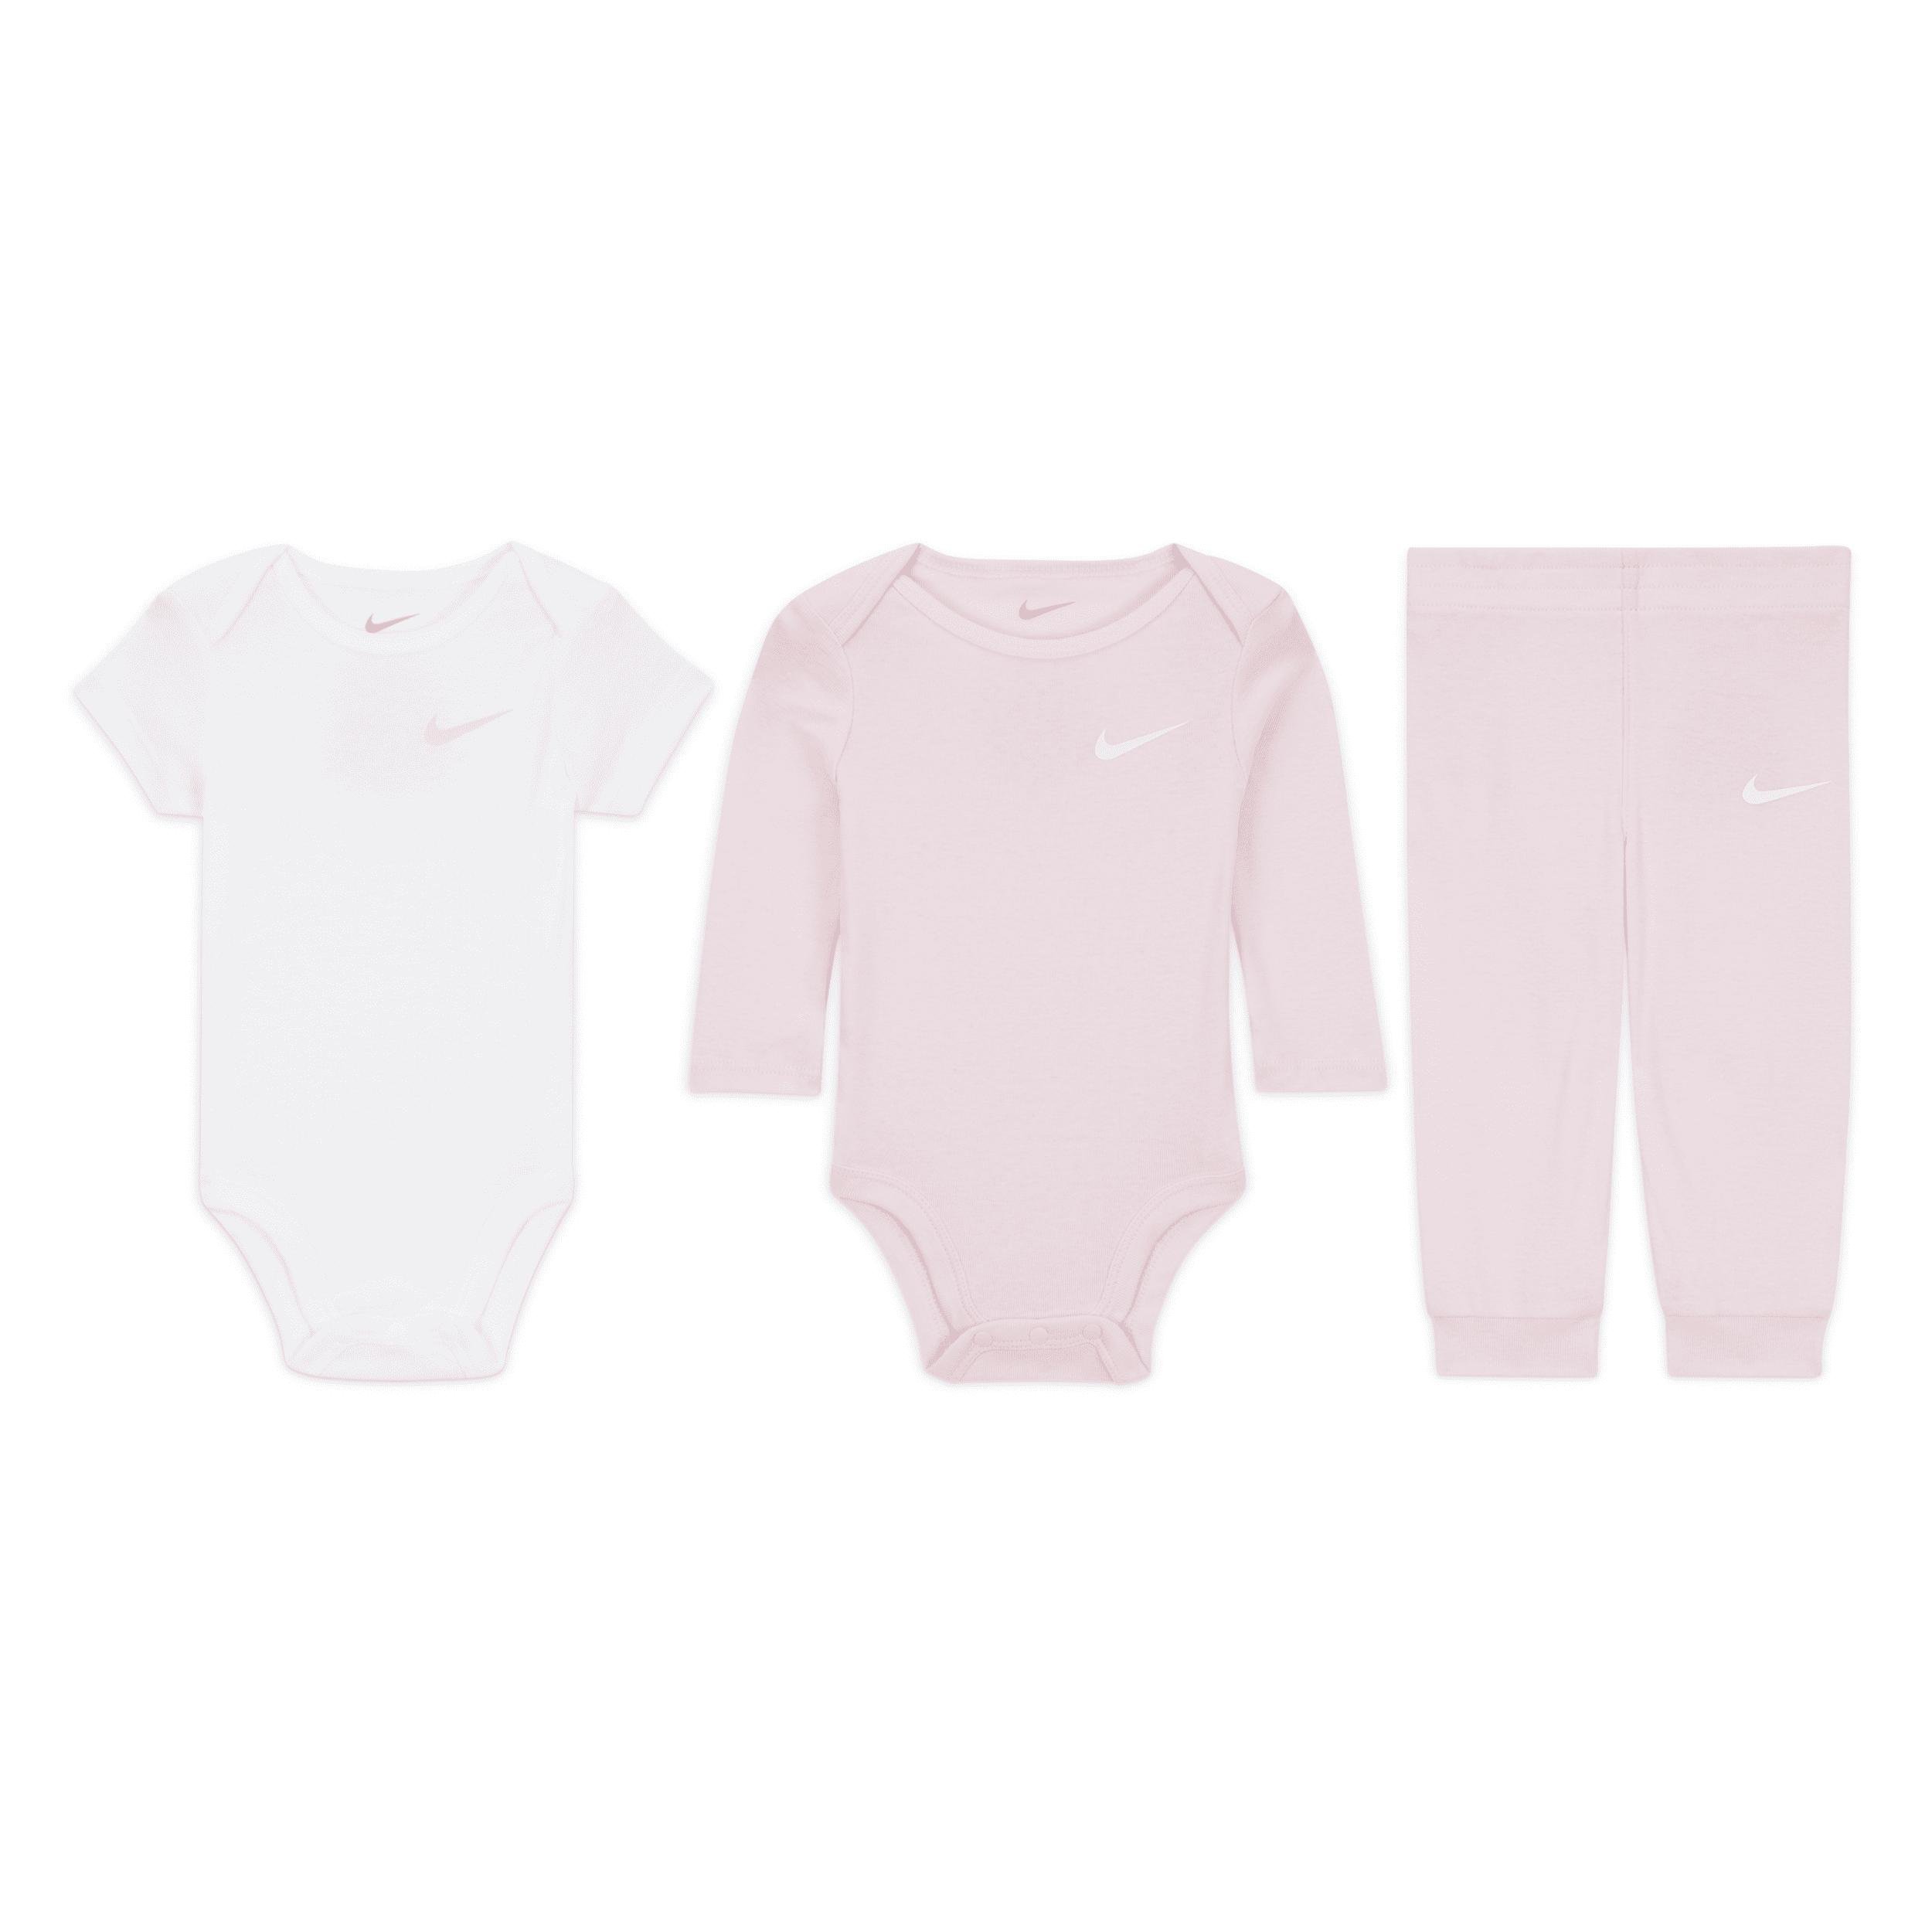 Nike Essentials Baby (0-9M) 3-Piece Bodysuit Set by NIKE